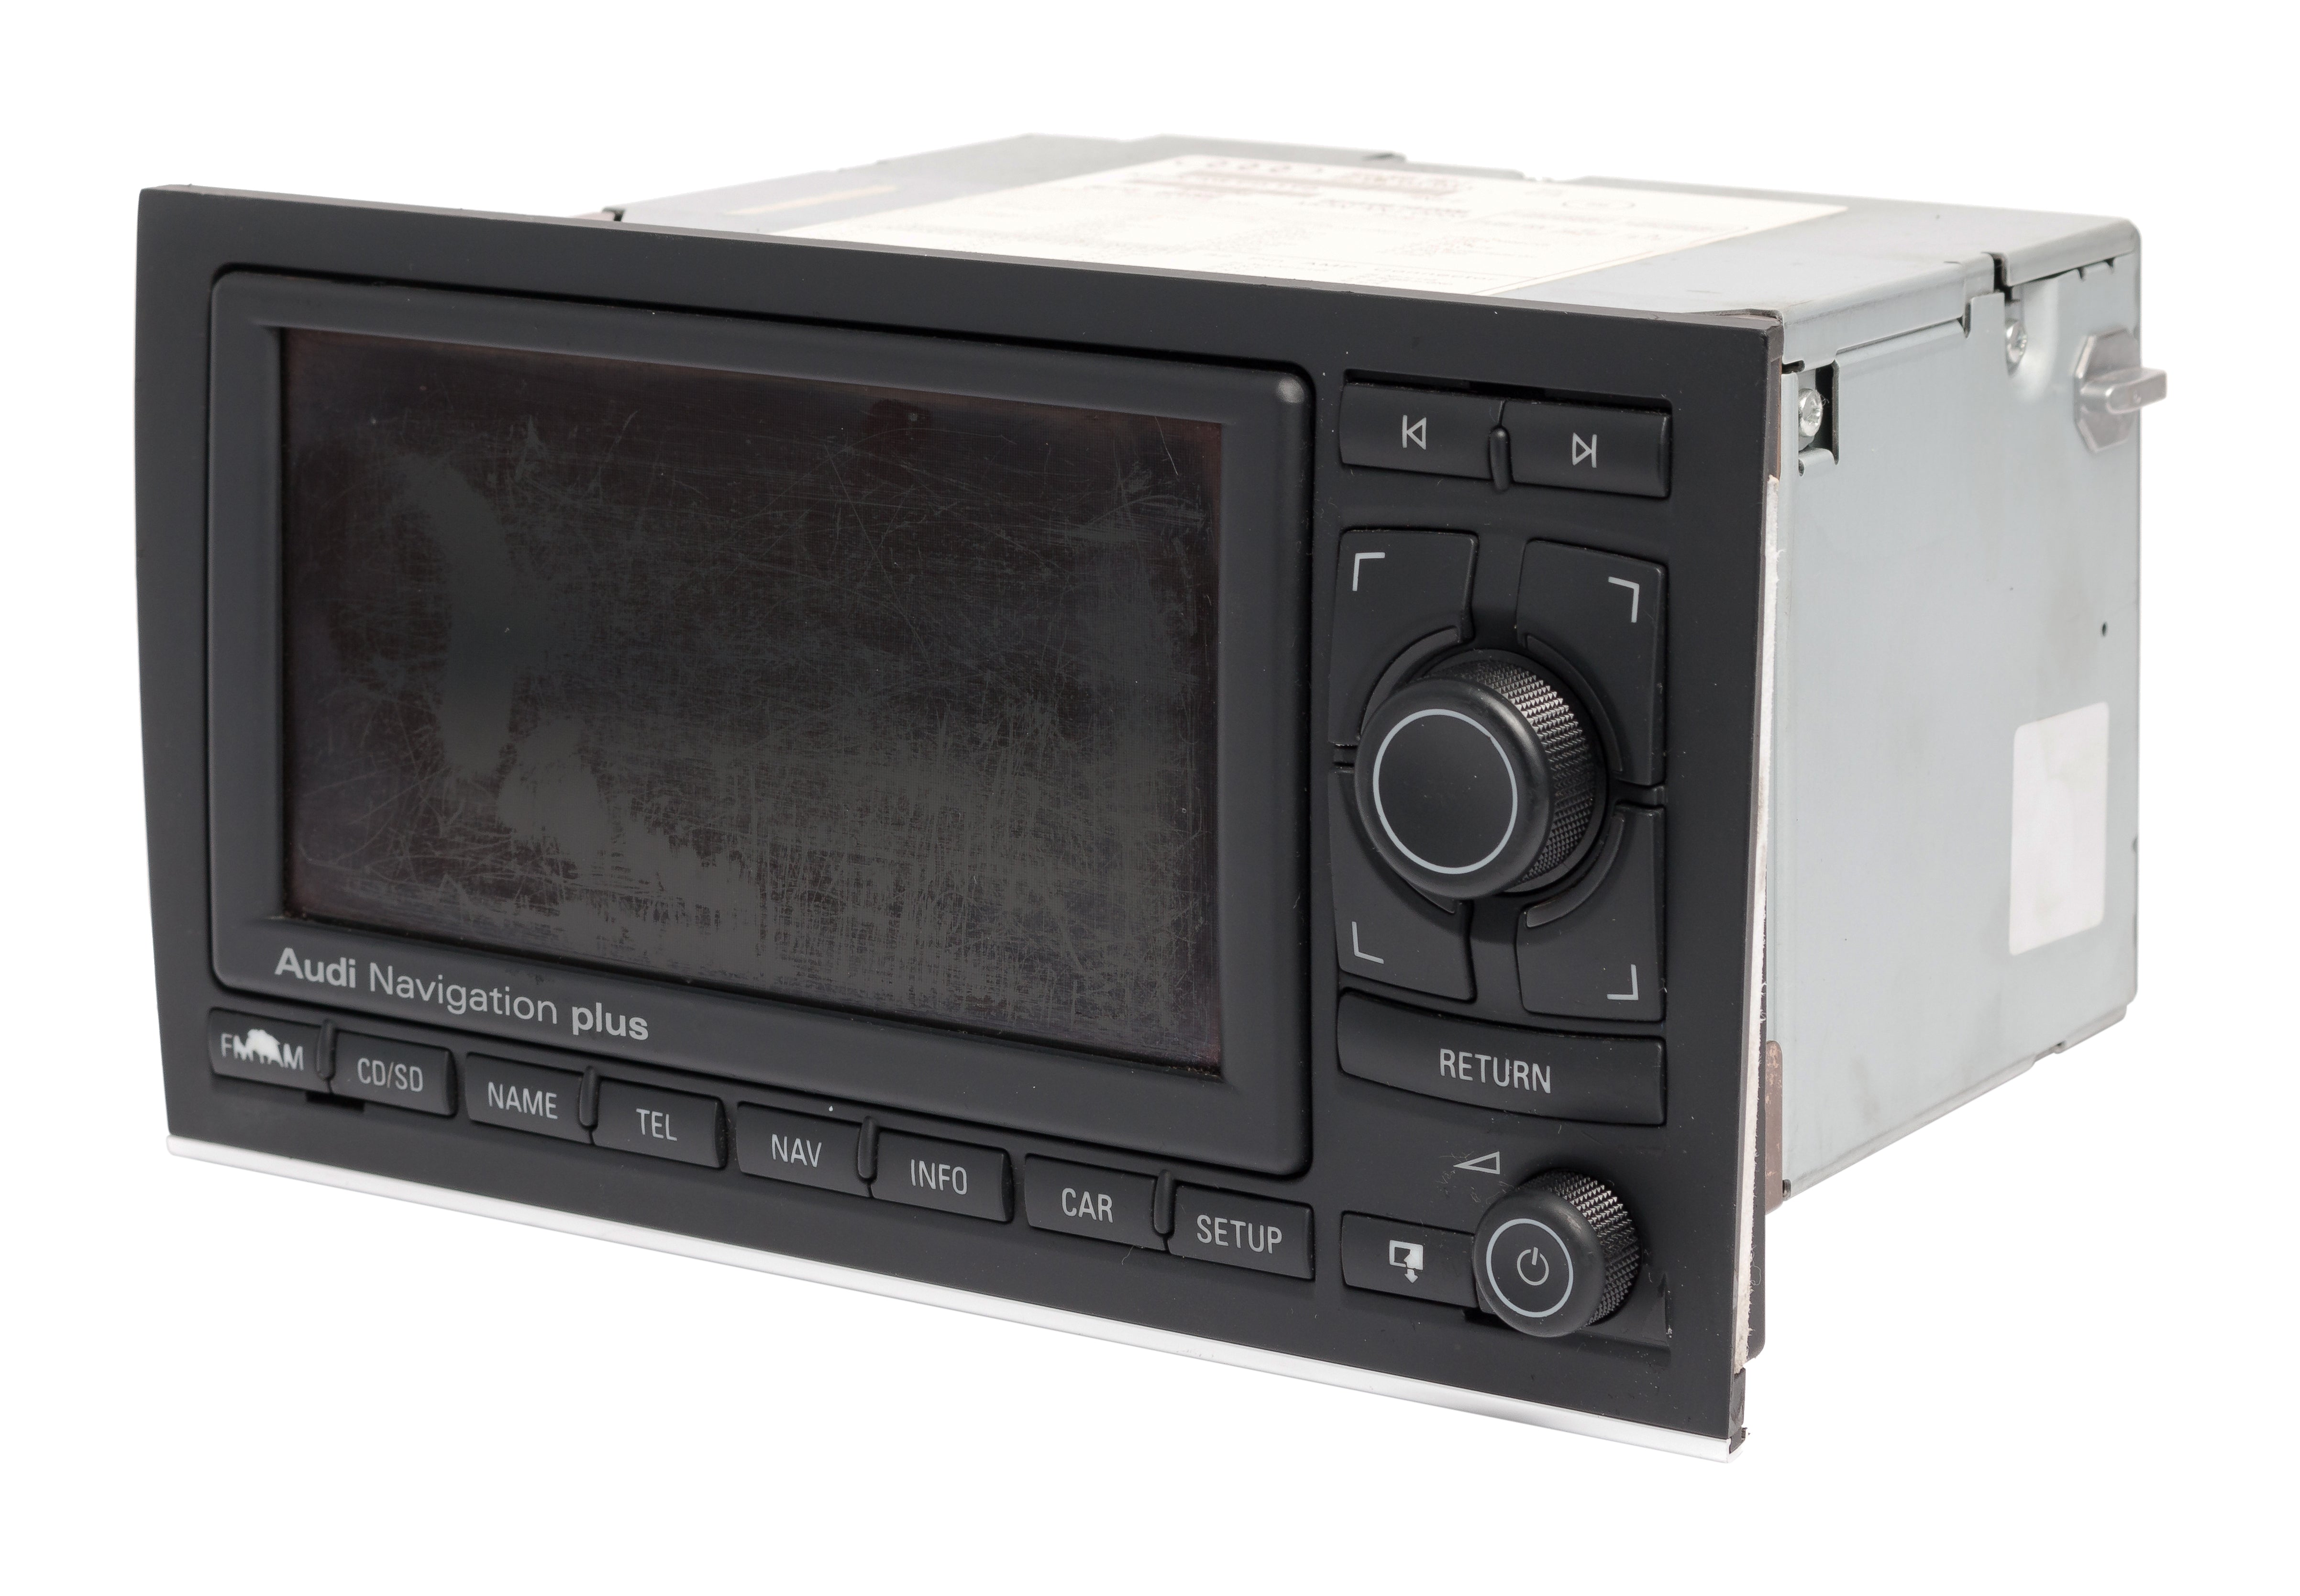 CD AMFM S4 Radio – Navigation Audi 2006-2009 Screen Display A4 Player w 1factoryradio